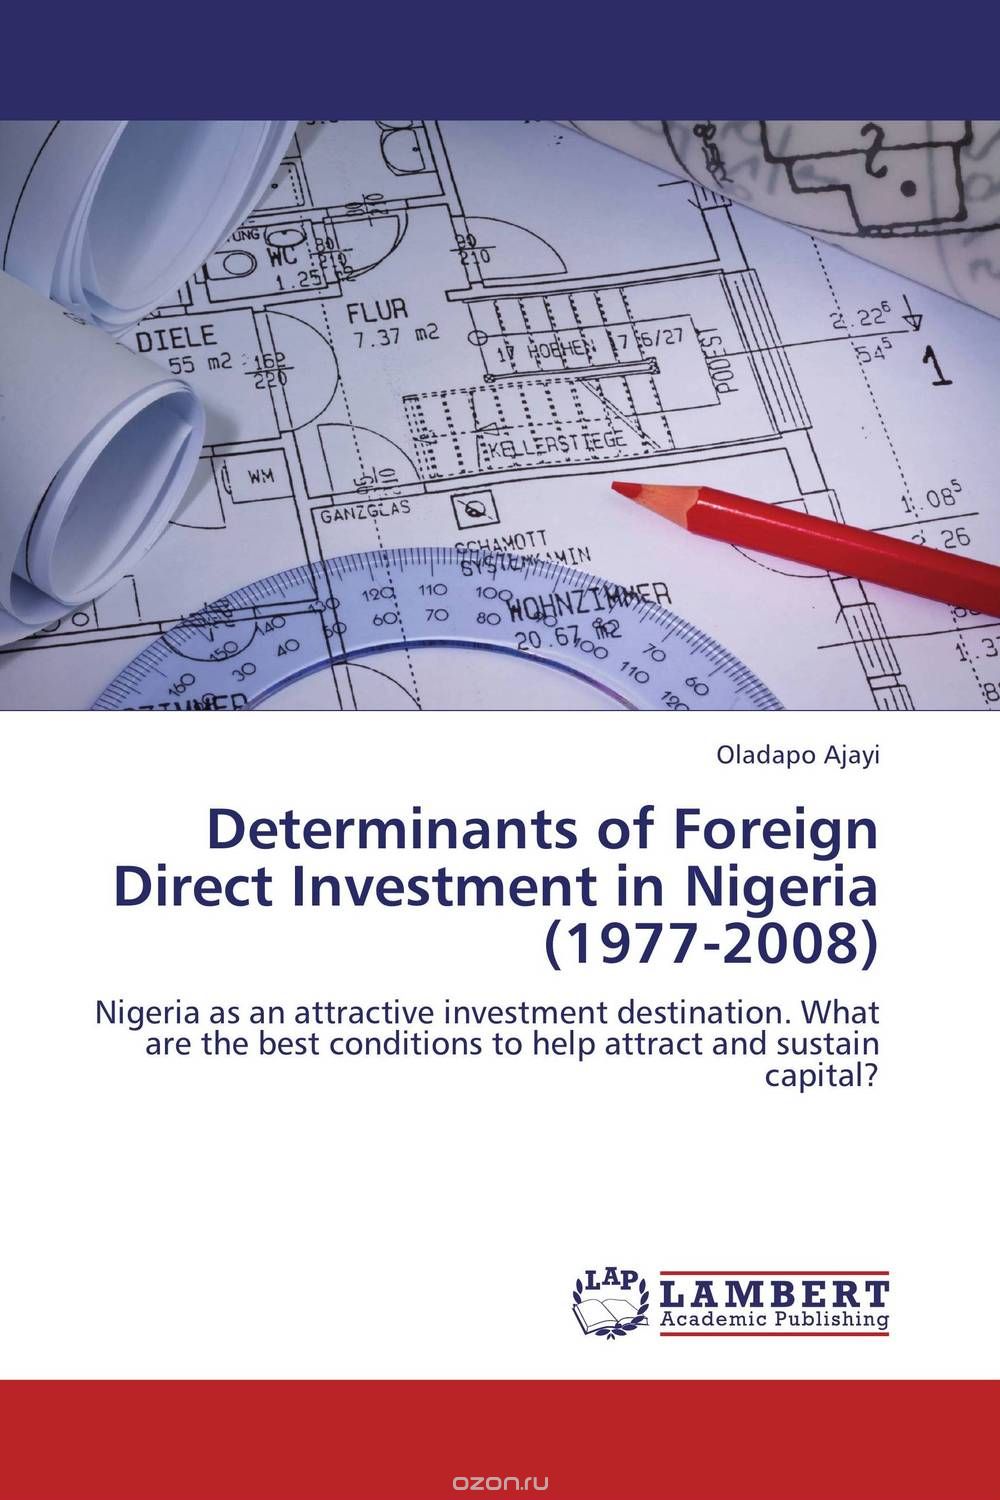 Скачать книгу "Determinants of Foreign Direct Investment in Nigeria (1977-2008)"